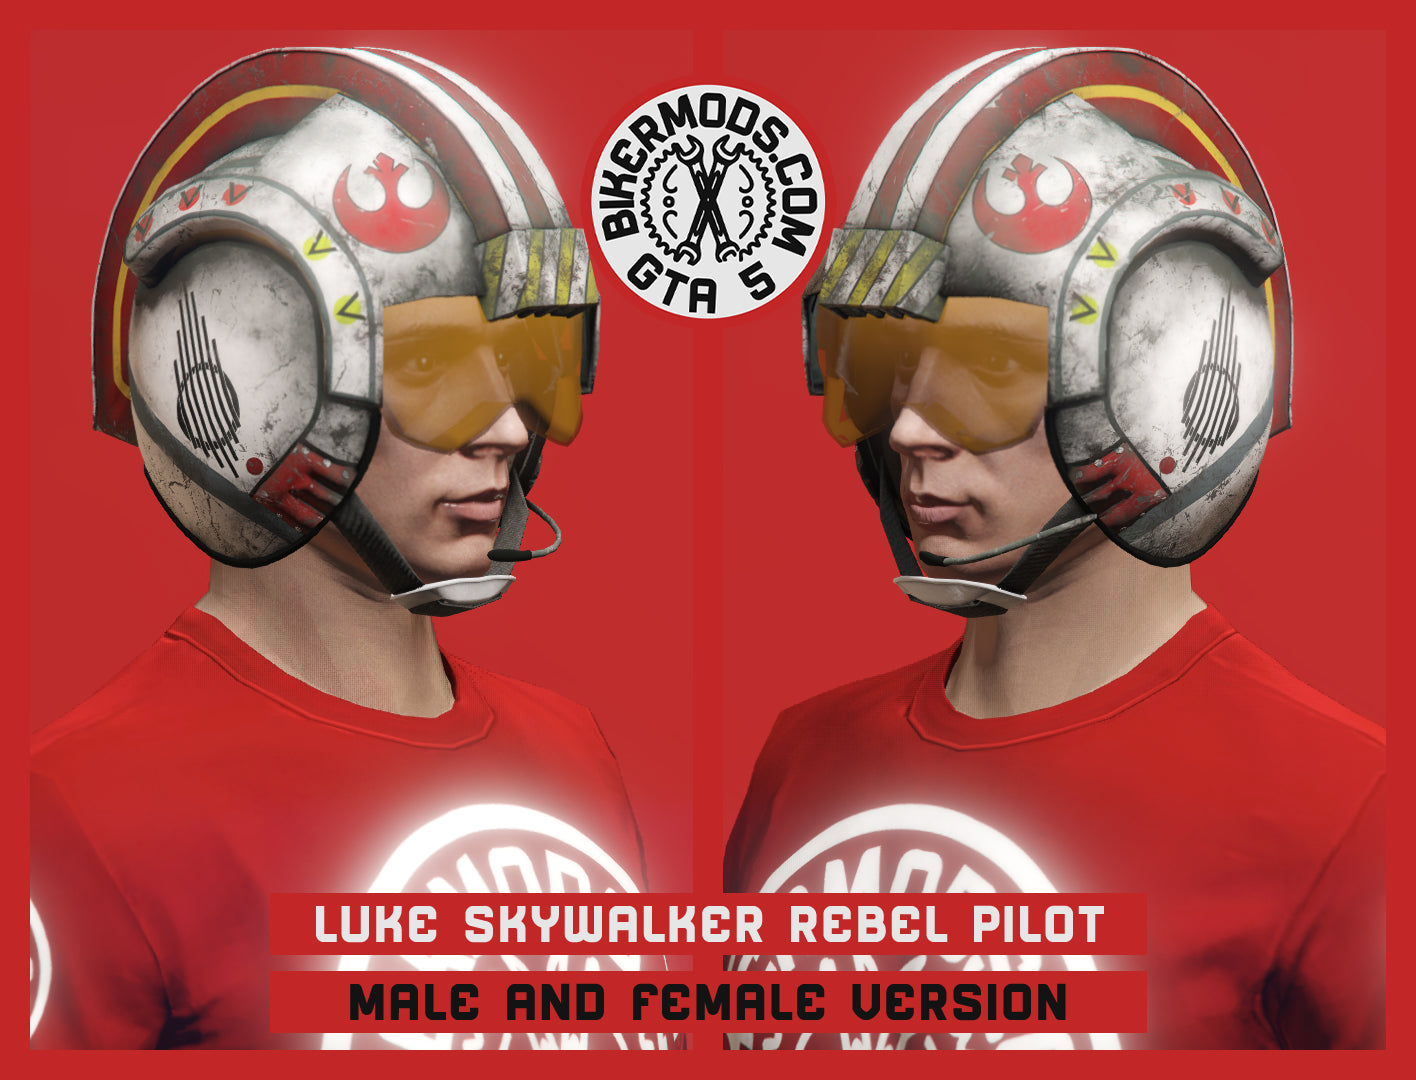 Luke Skywalker Rebel Pilot Helmet (Star Wars)